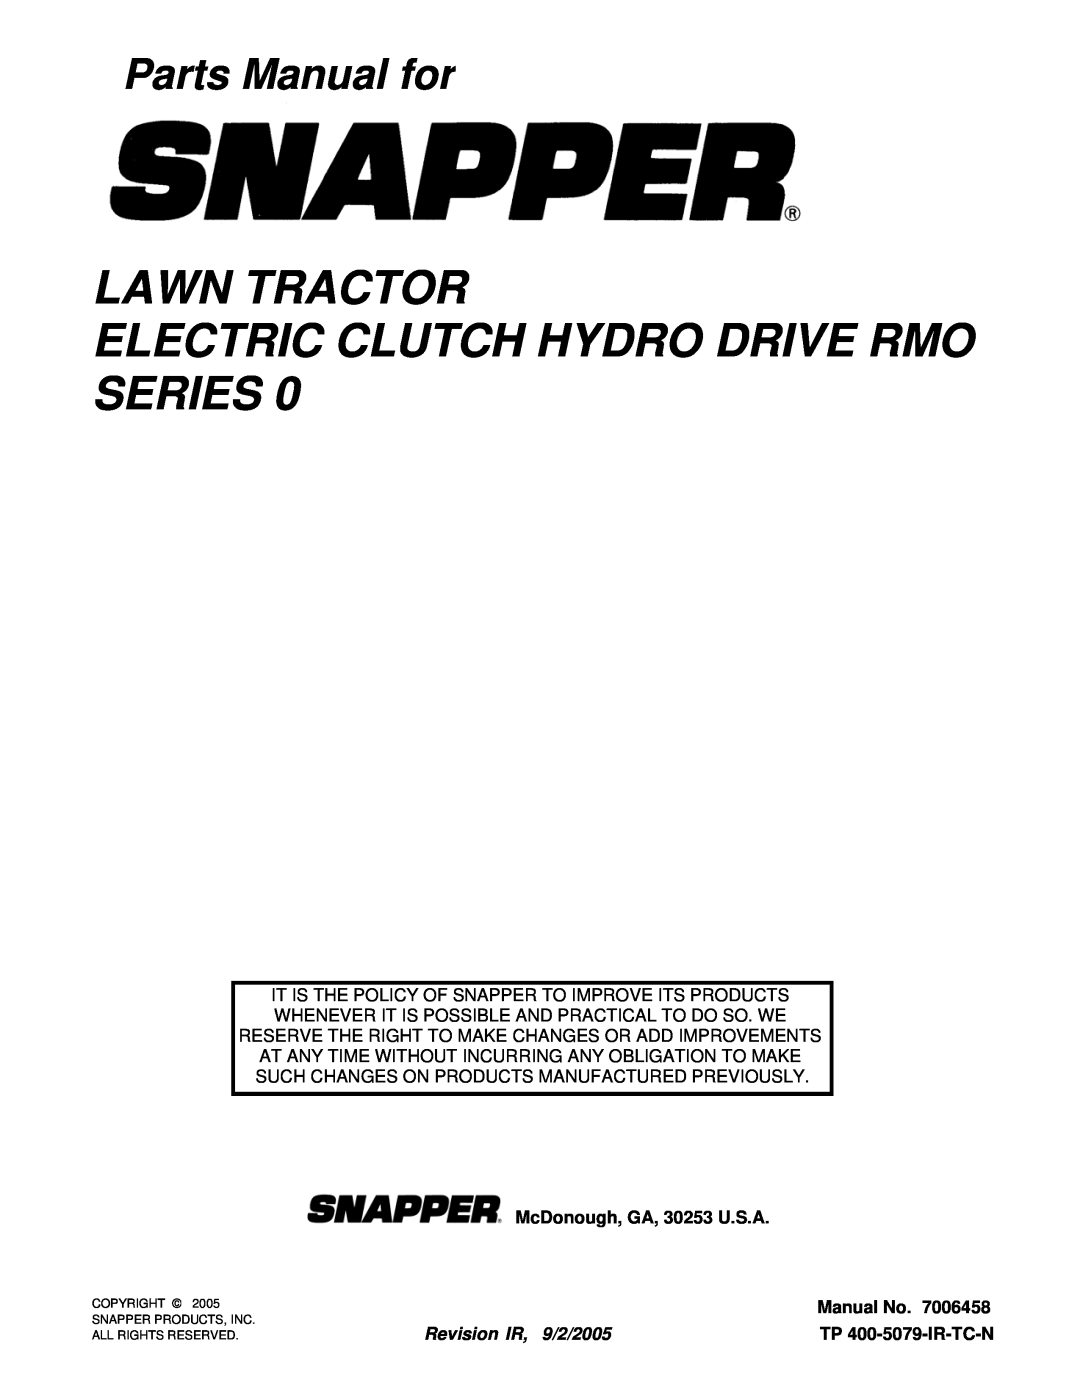 Snapper LT20440, LT18400 Lawn Tractor Electric Clutch Hydro Drive Rmo Series, Parts Manual for, McDonough, GA, 30253 U.S.A 